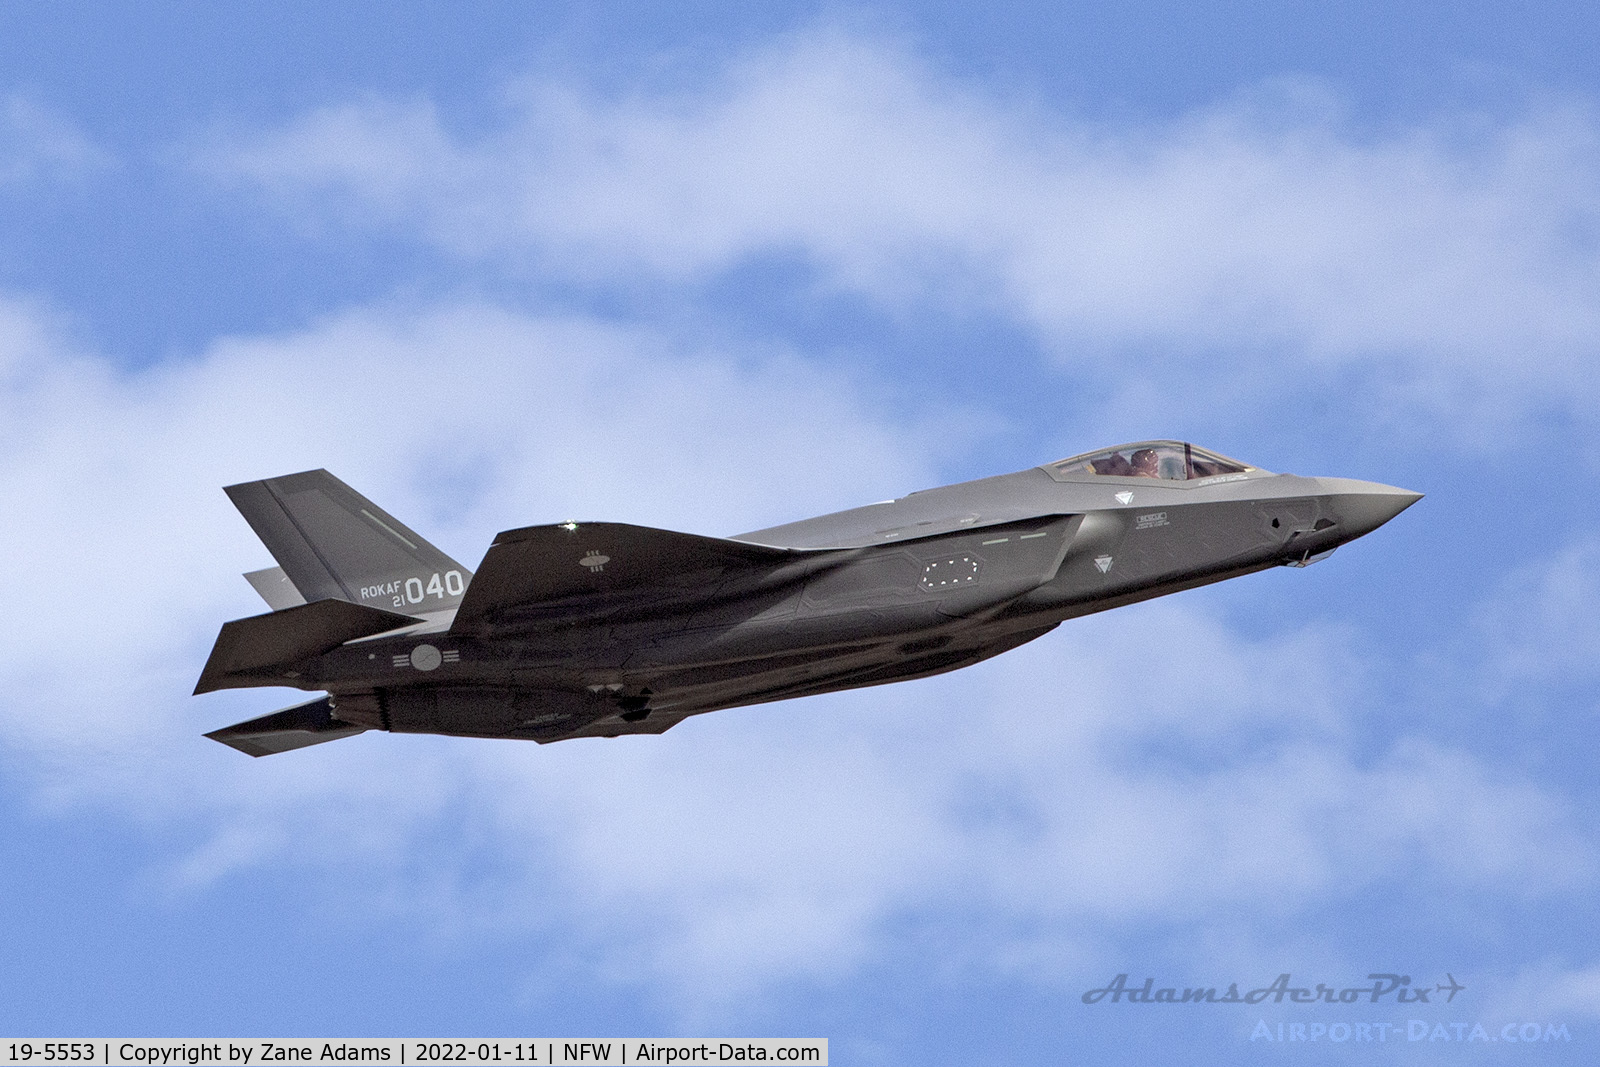 19-5553, 2020 Lockheed Martin F-35A Lightning II C/N 19-5553, Republic of Korea Air Force F-35A departs NAS Fort Worth on a local test flight